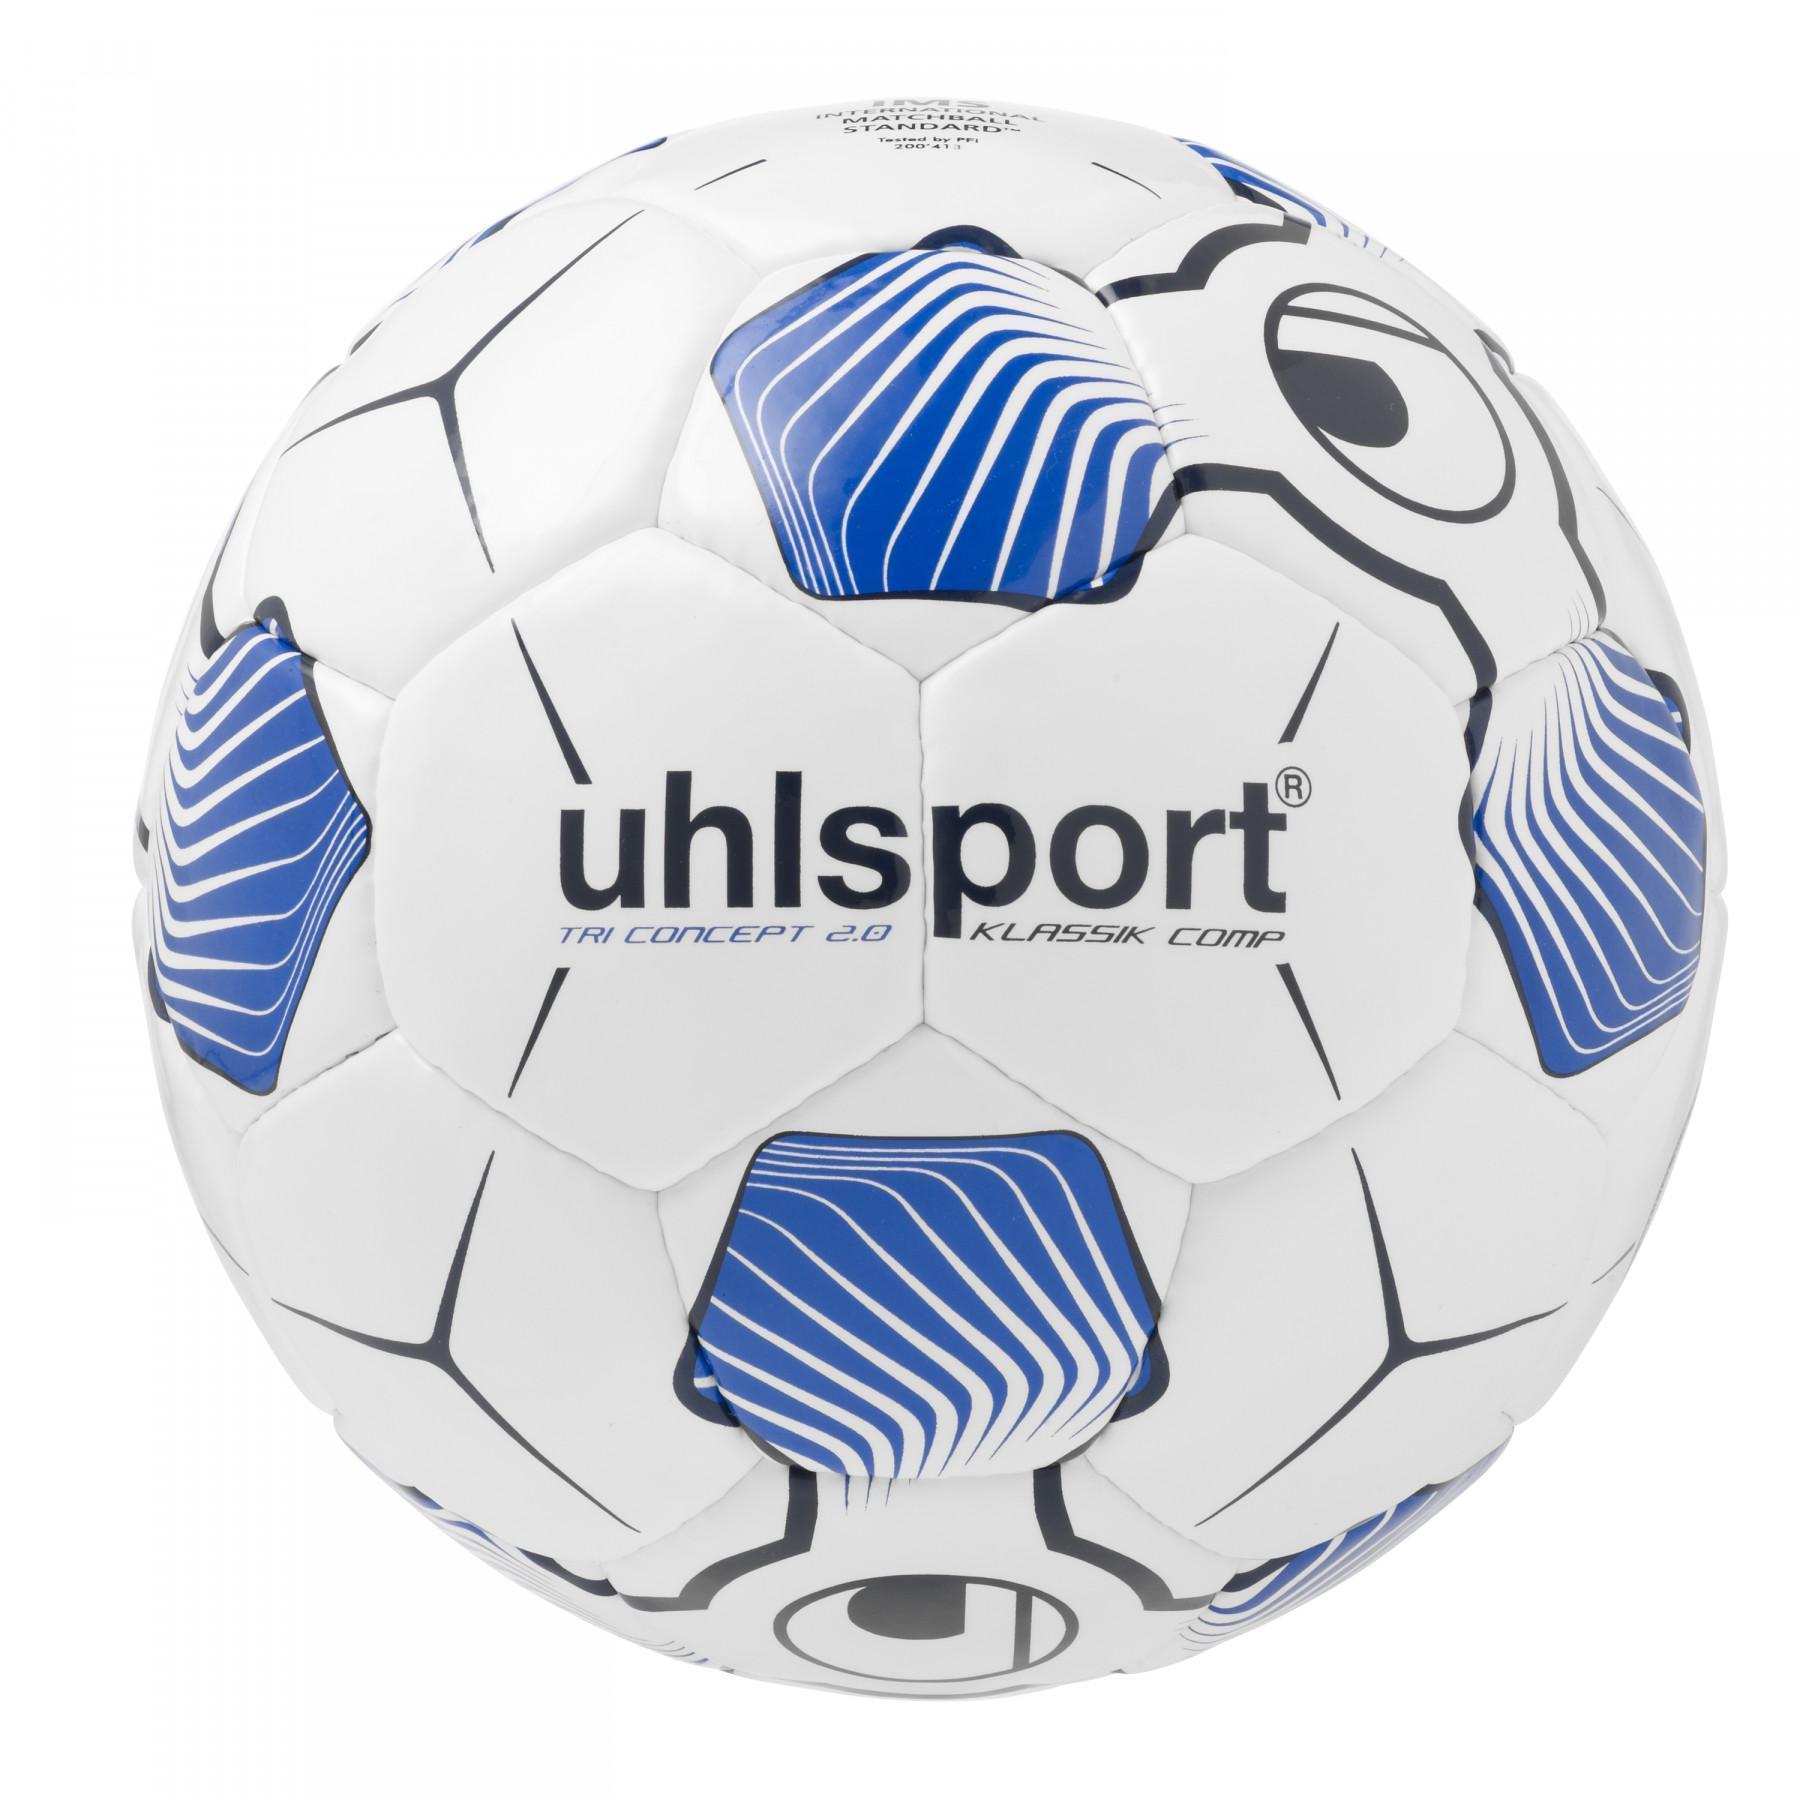 Balon Uhlsport Tri Concept 2.0 Klassik Comp